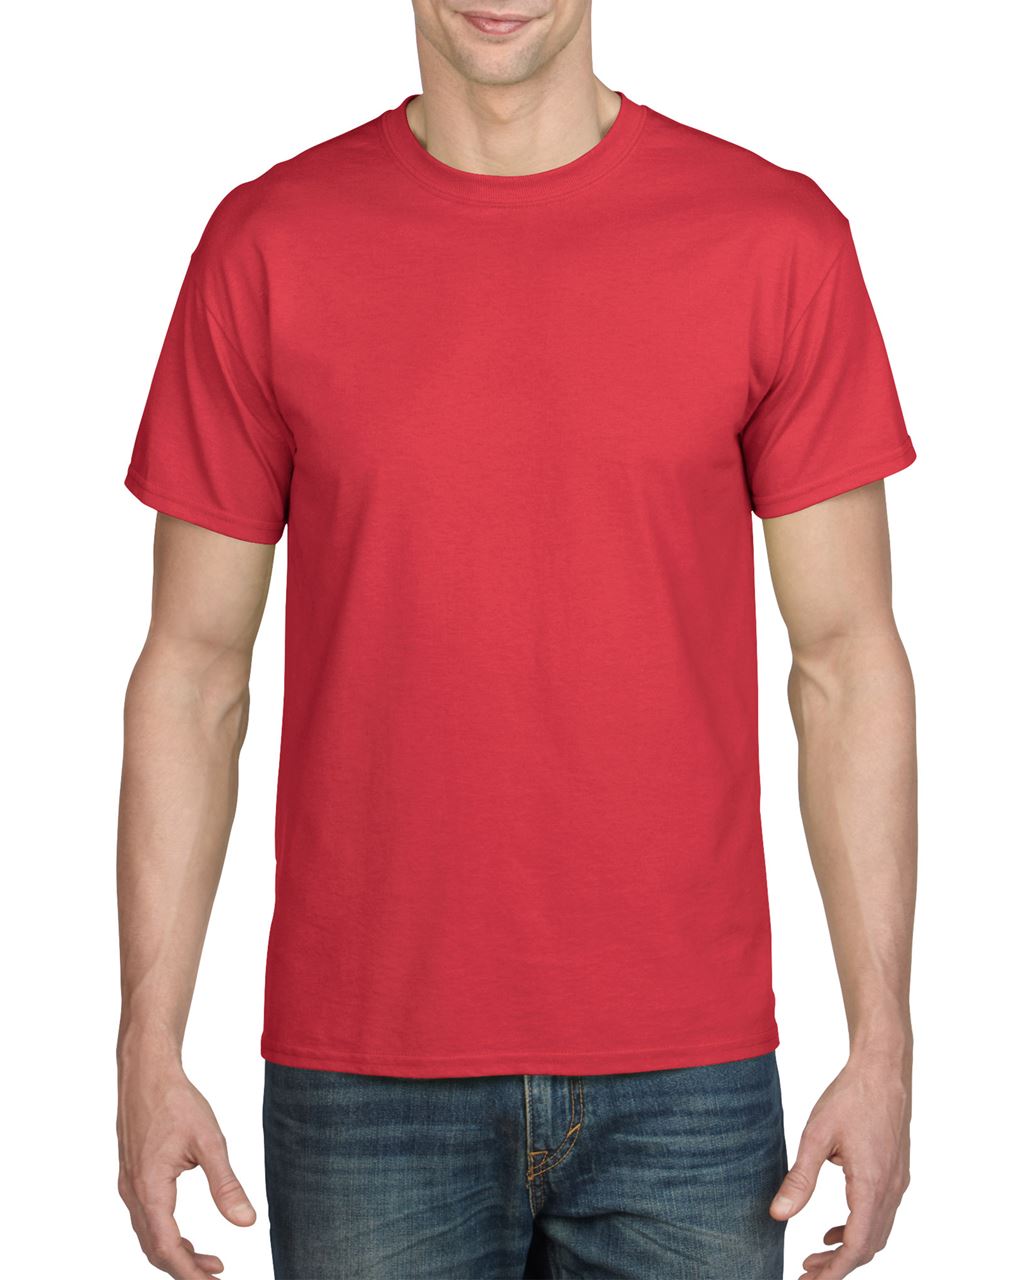 Gildan Herren T-Shirt Basic Rundhals Kurzarm Shirt Slim Fit Baumwolle